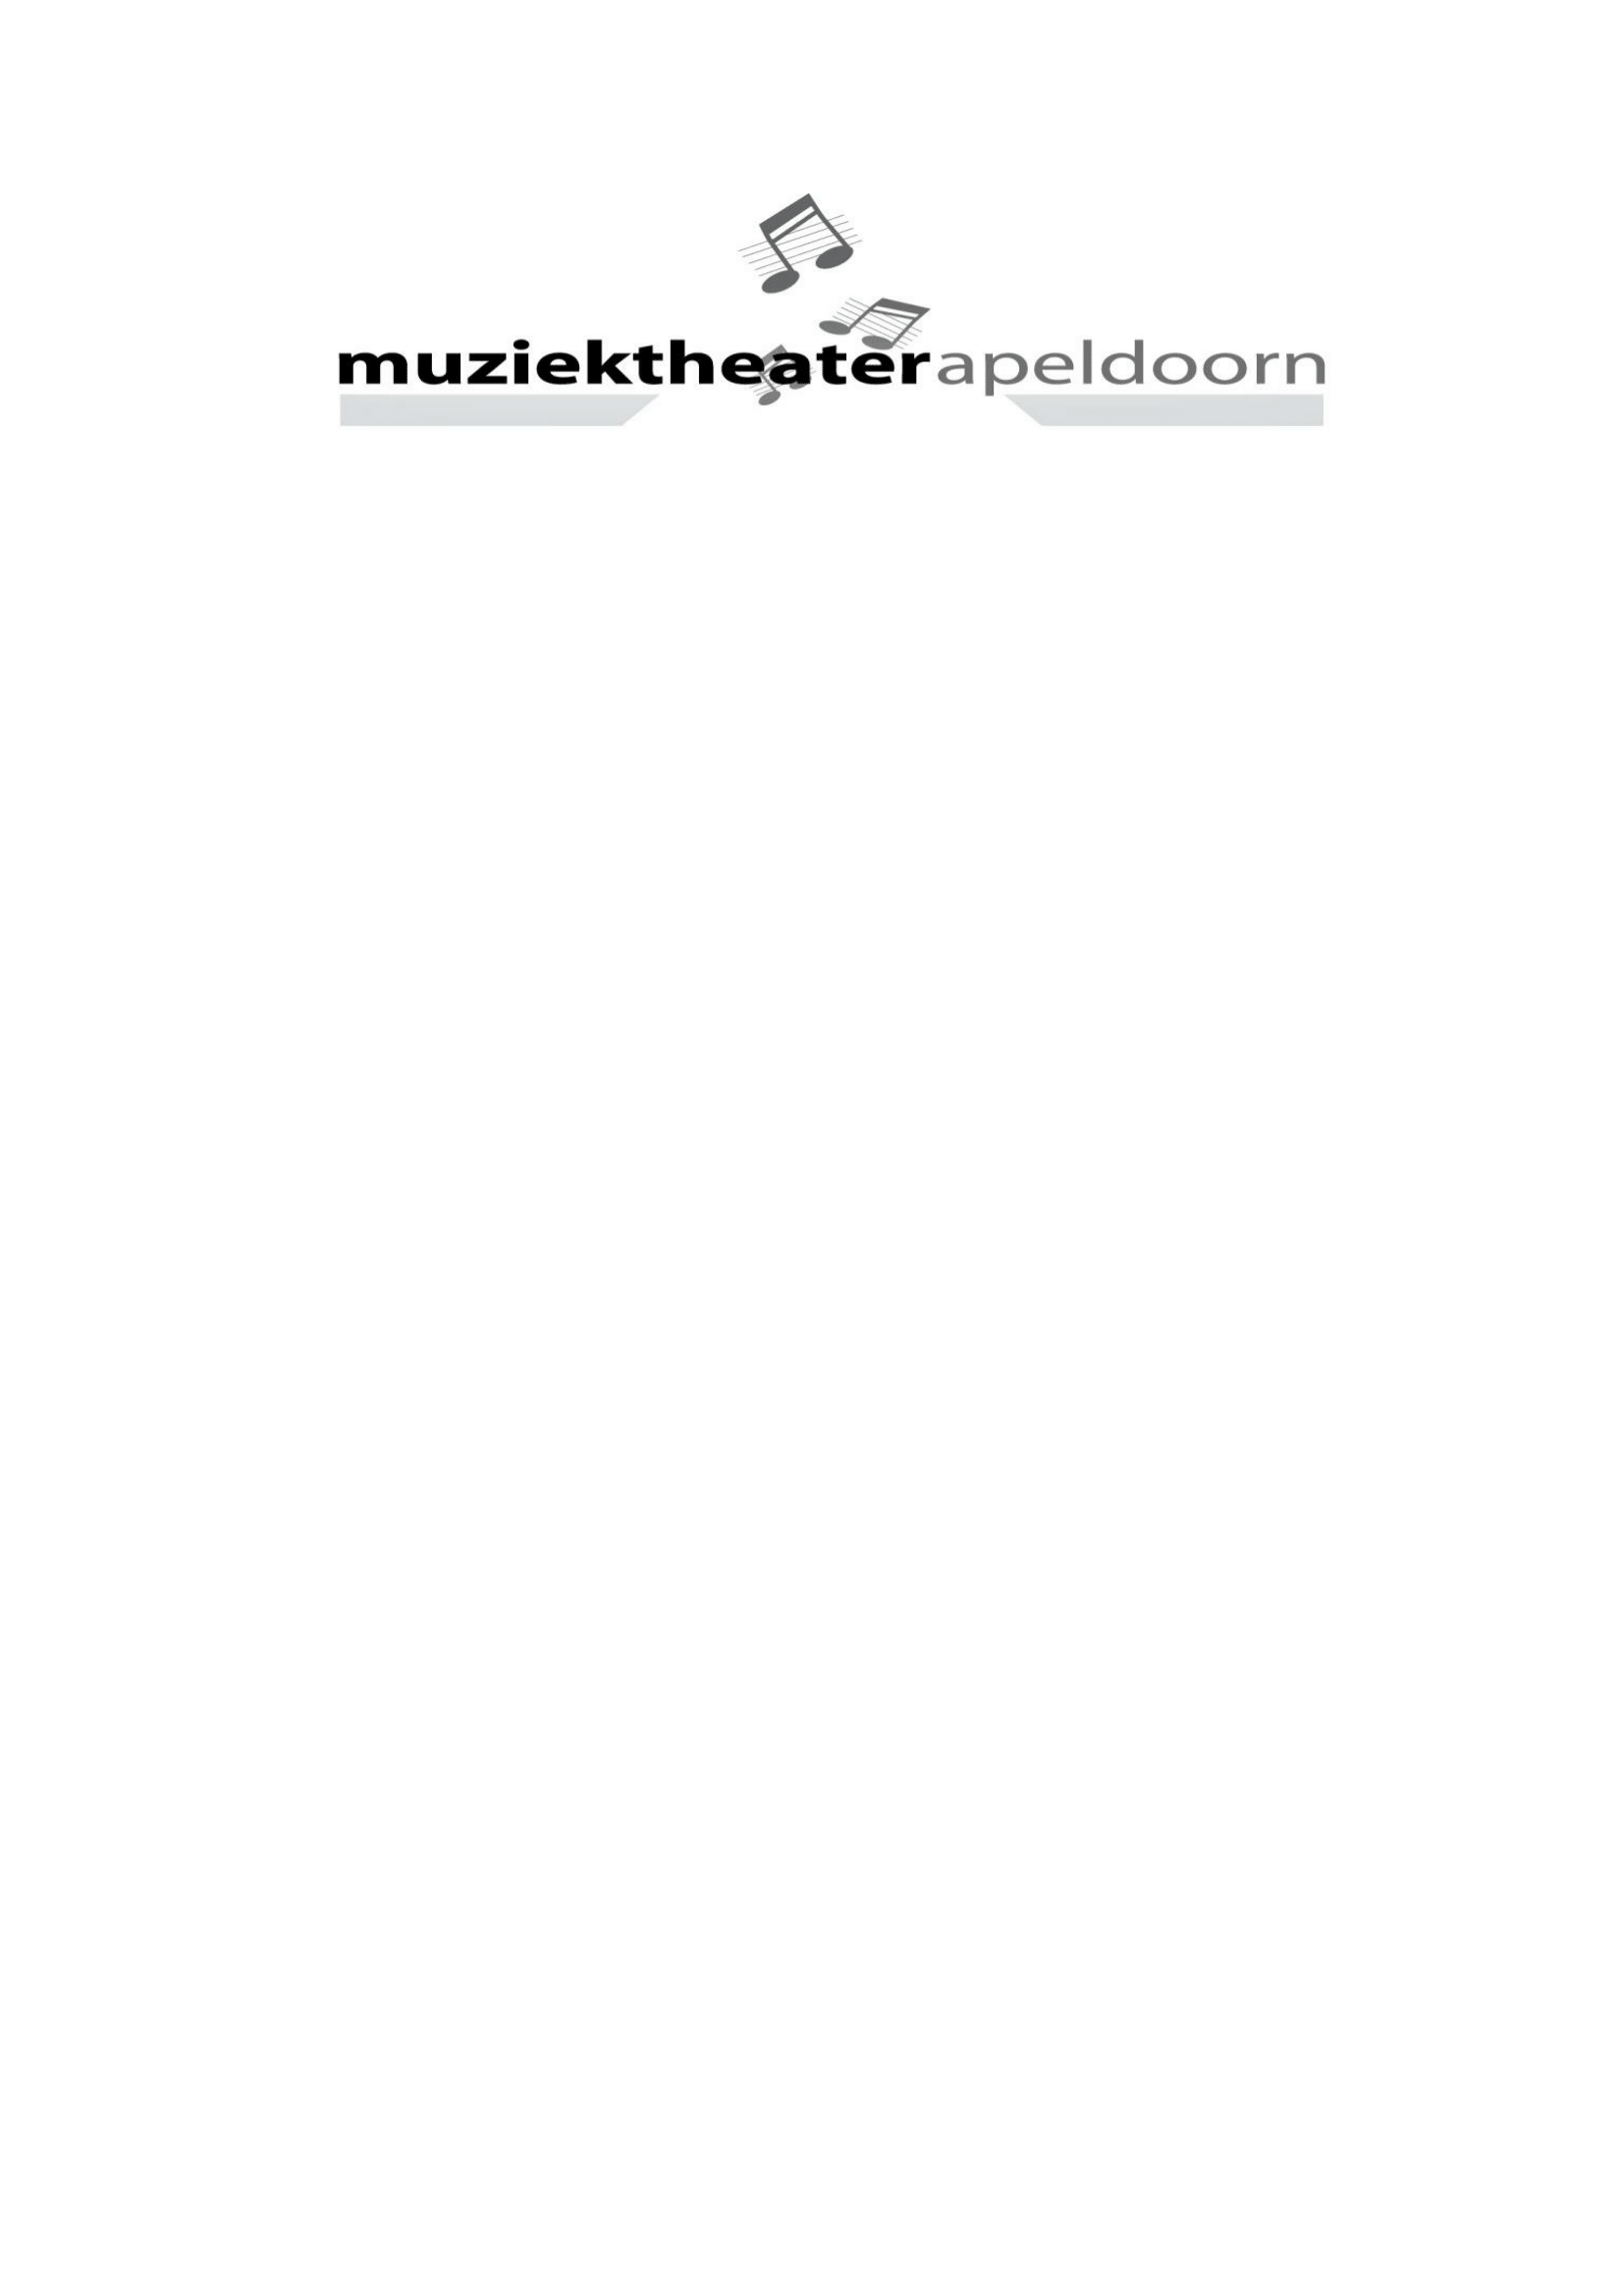 Muziektheater Apeldoorn